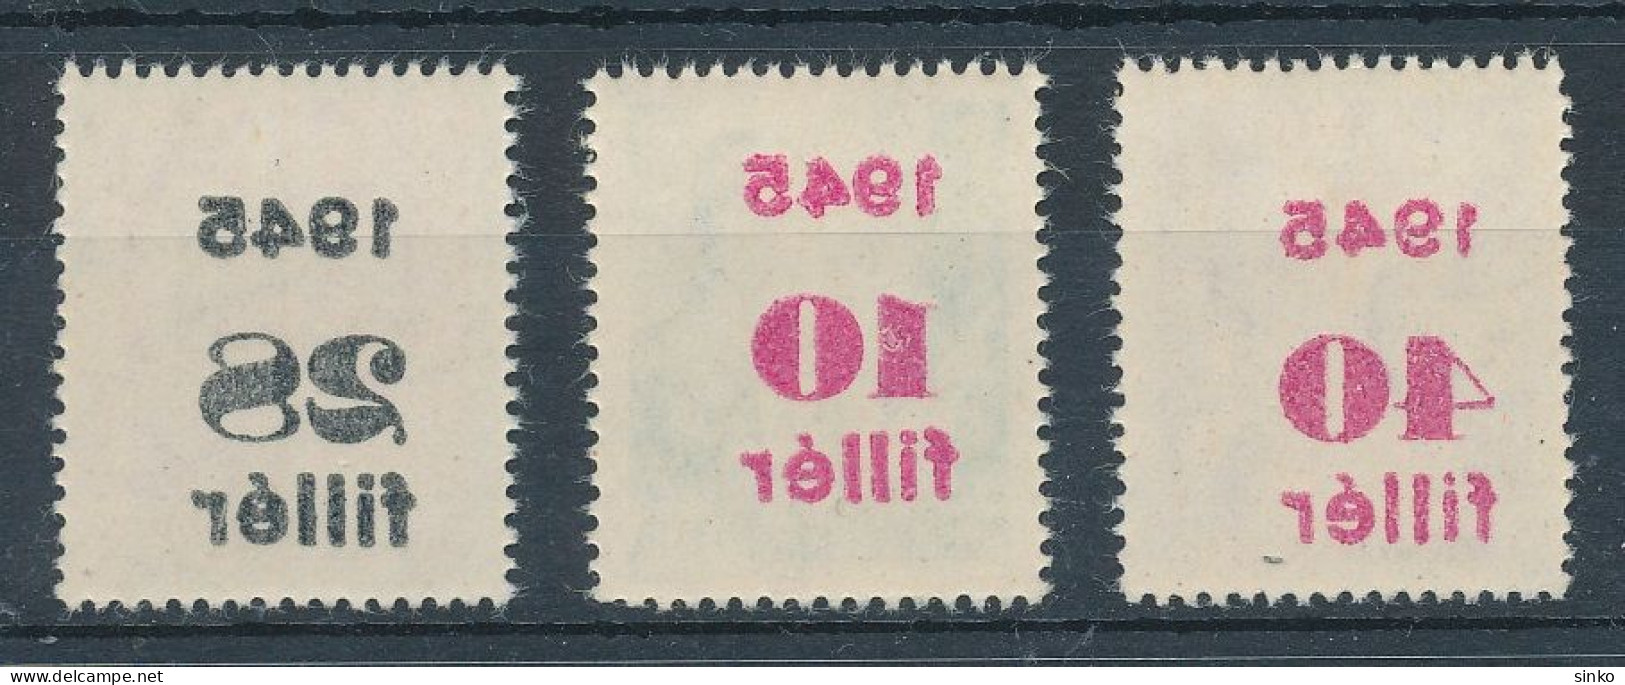 1945. Auxiliary Stamps - Misprint - Errors, Freaks & Oddities (EFO)